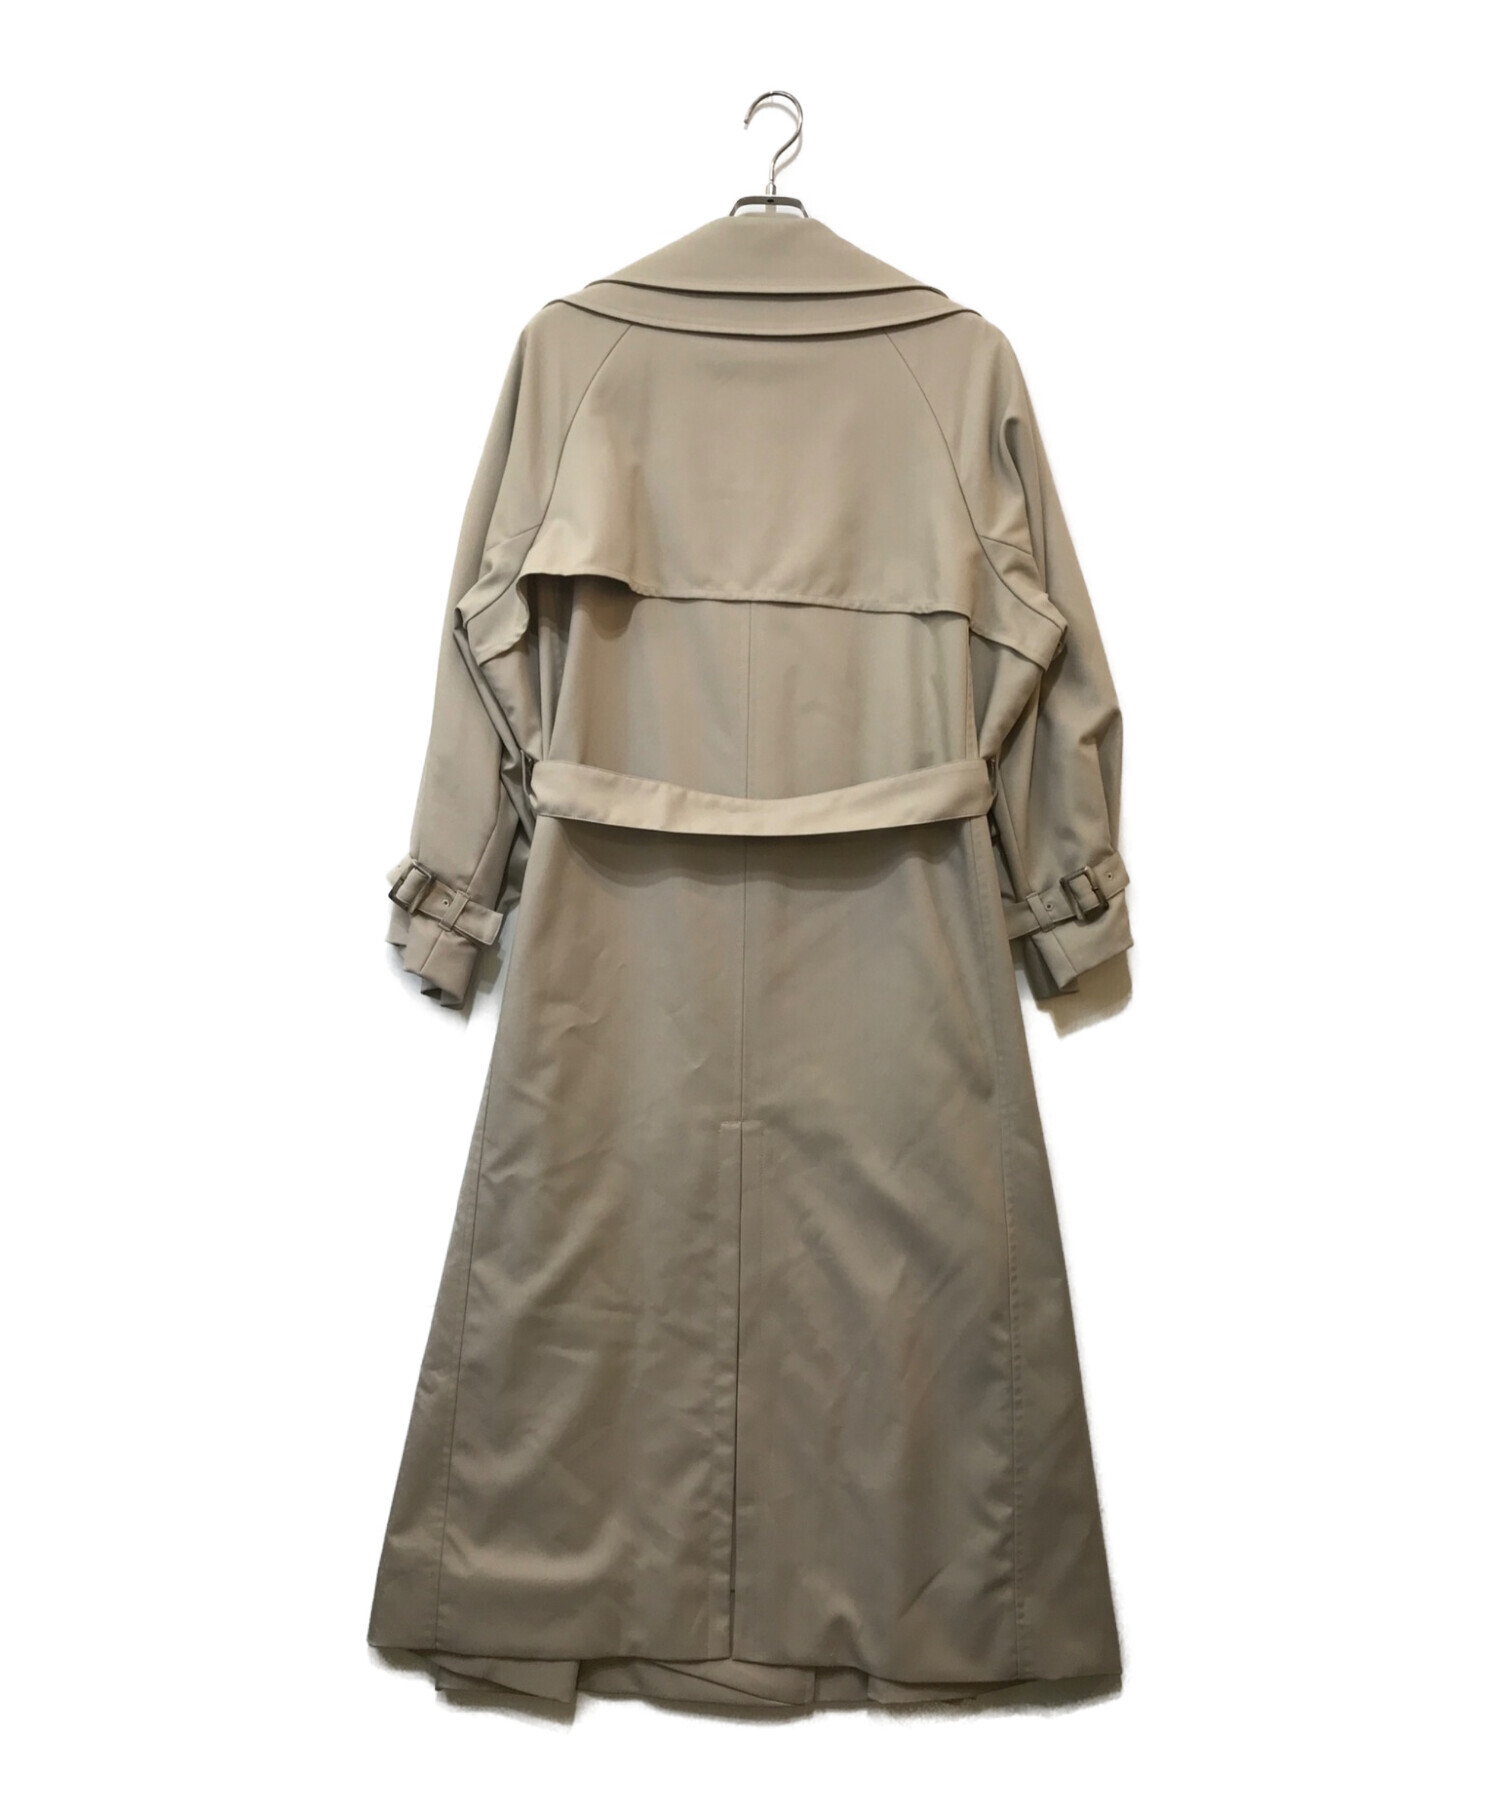 Sheer SR  DRESS TRENCH COAT(beige size0)袖口25cm﻿